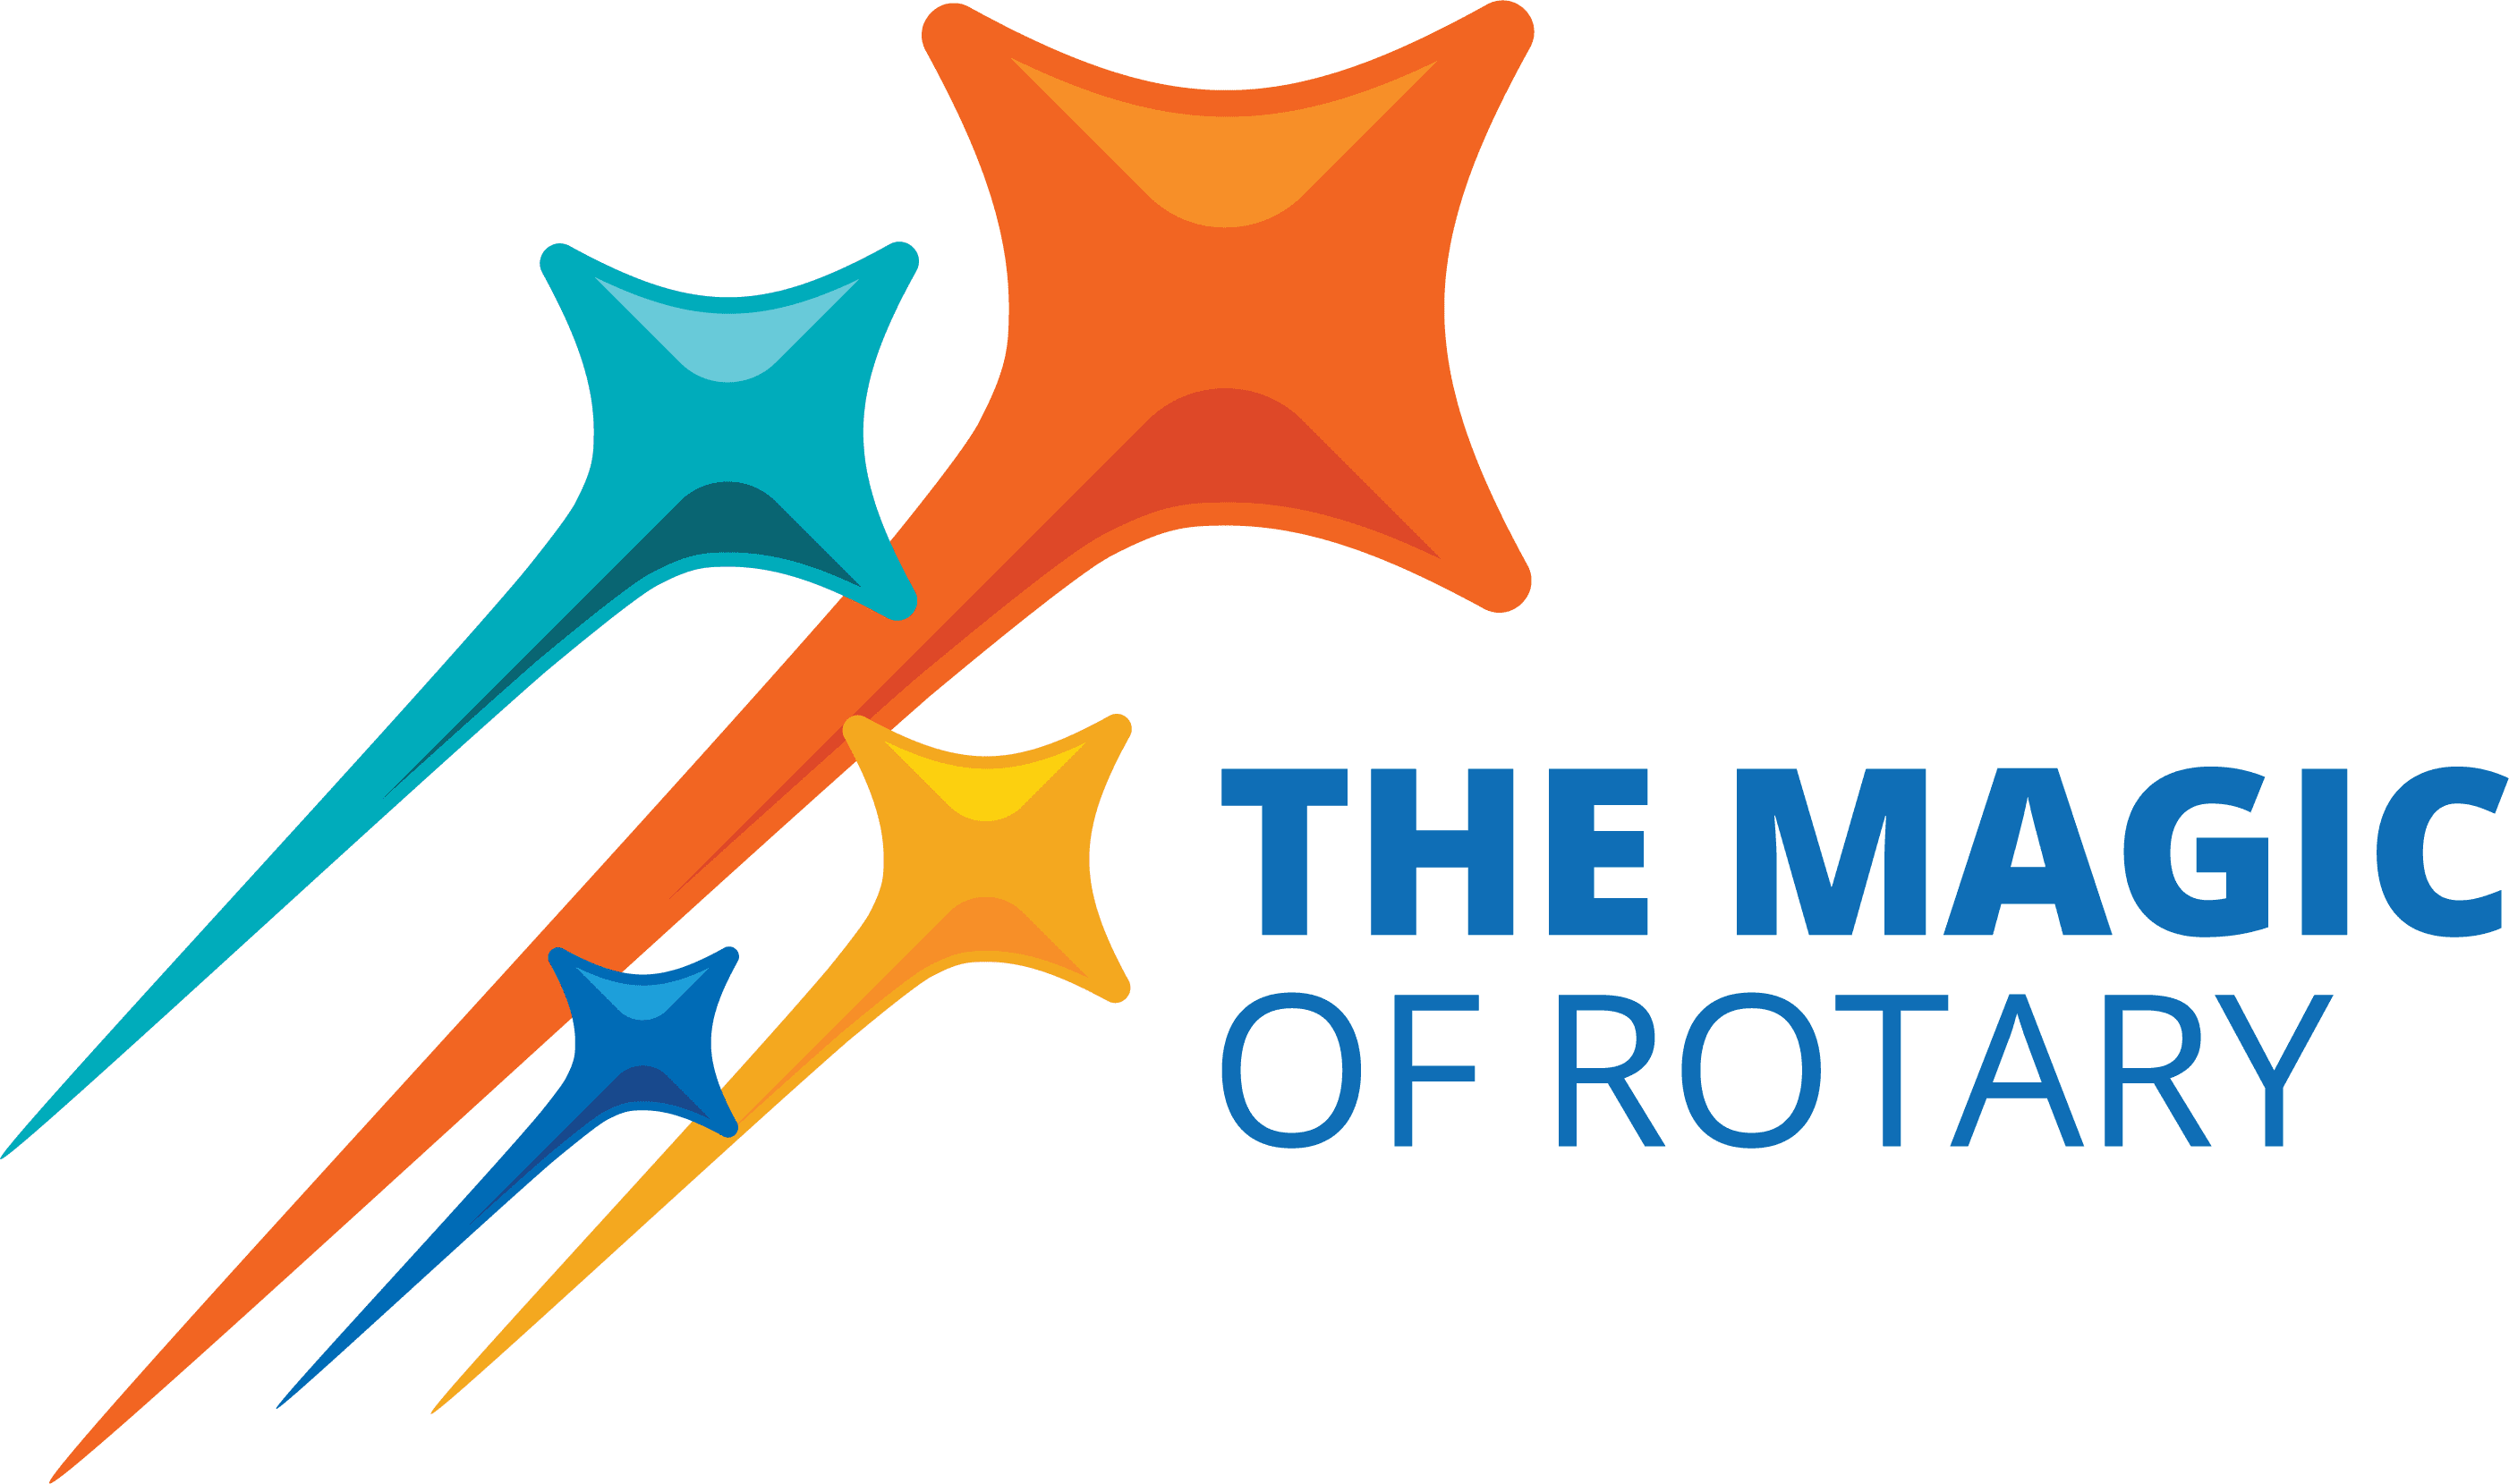 The magic of Rotary